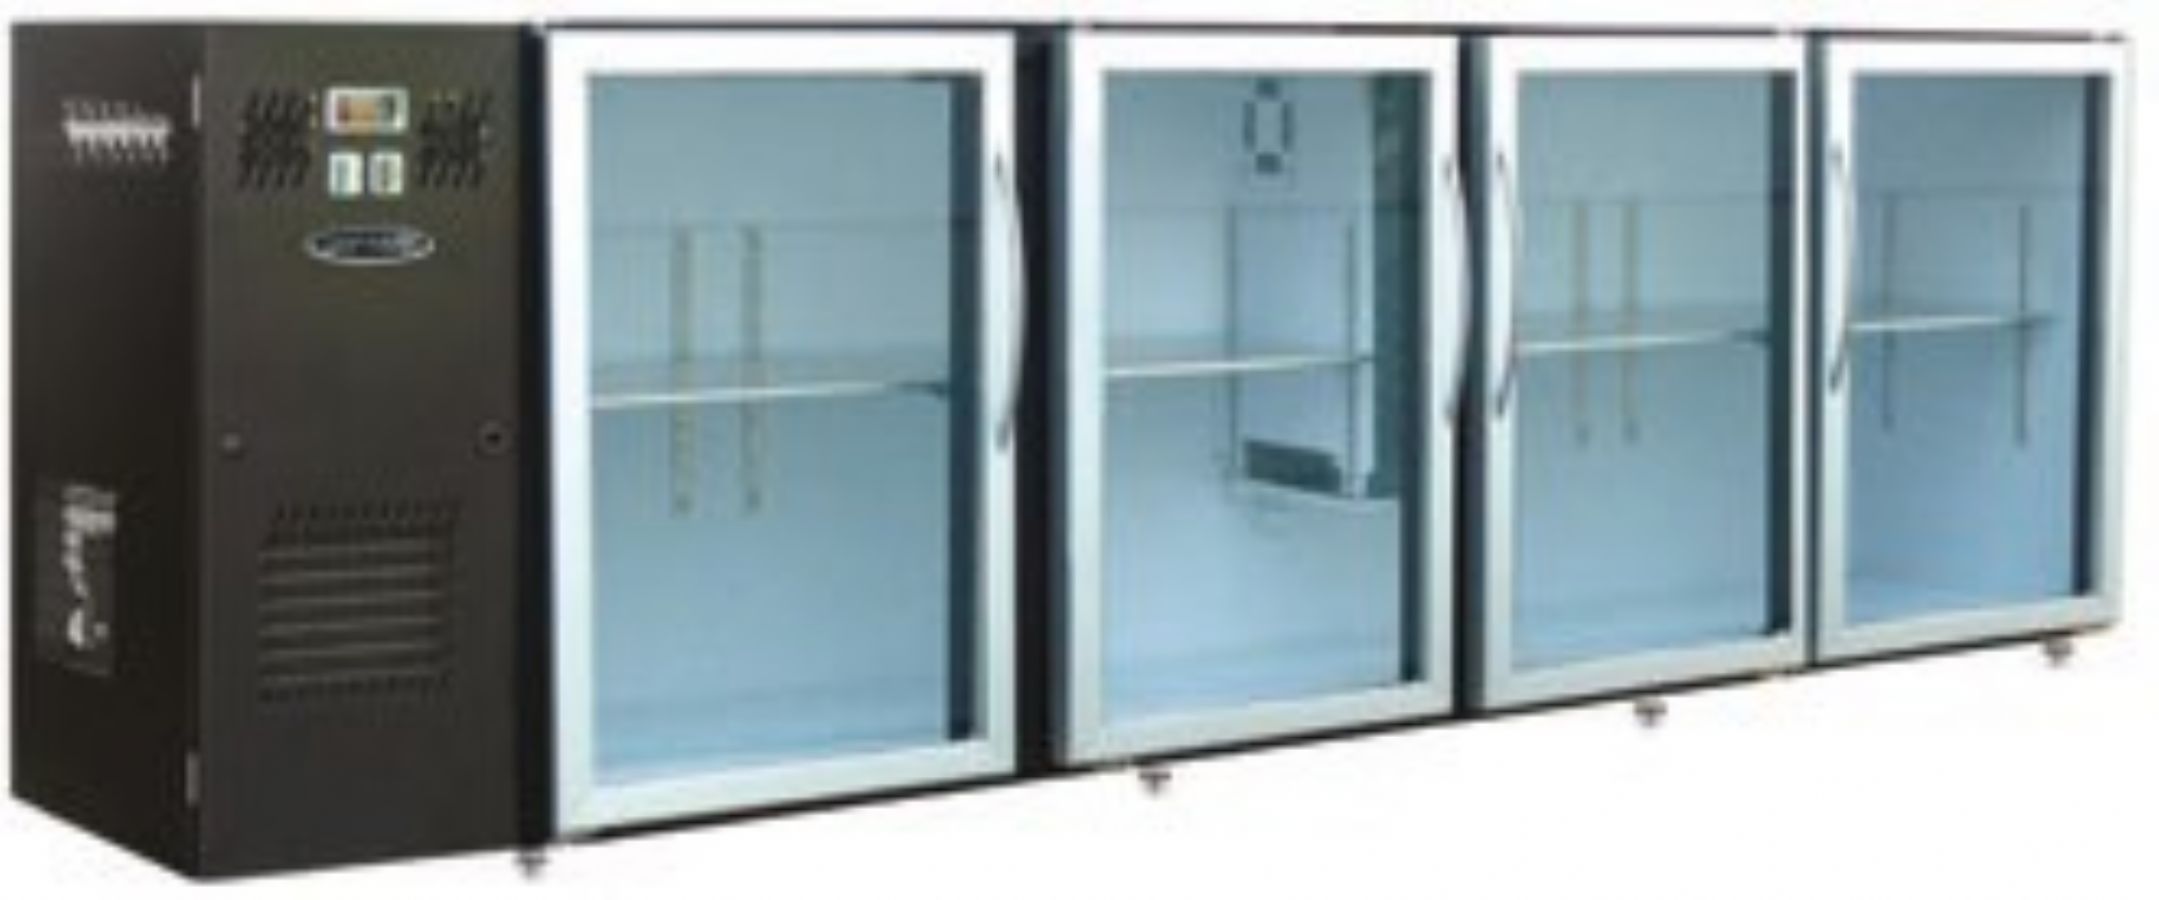 Arrire-bar Skinplate - Srie LEDS - Groupe log - 4 moyennes portes vitres - 814 litres - U74MVS